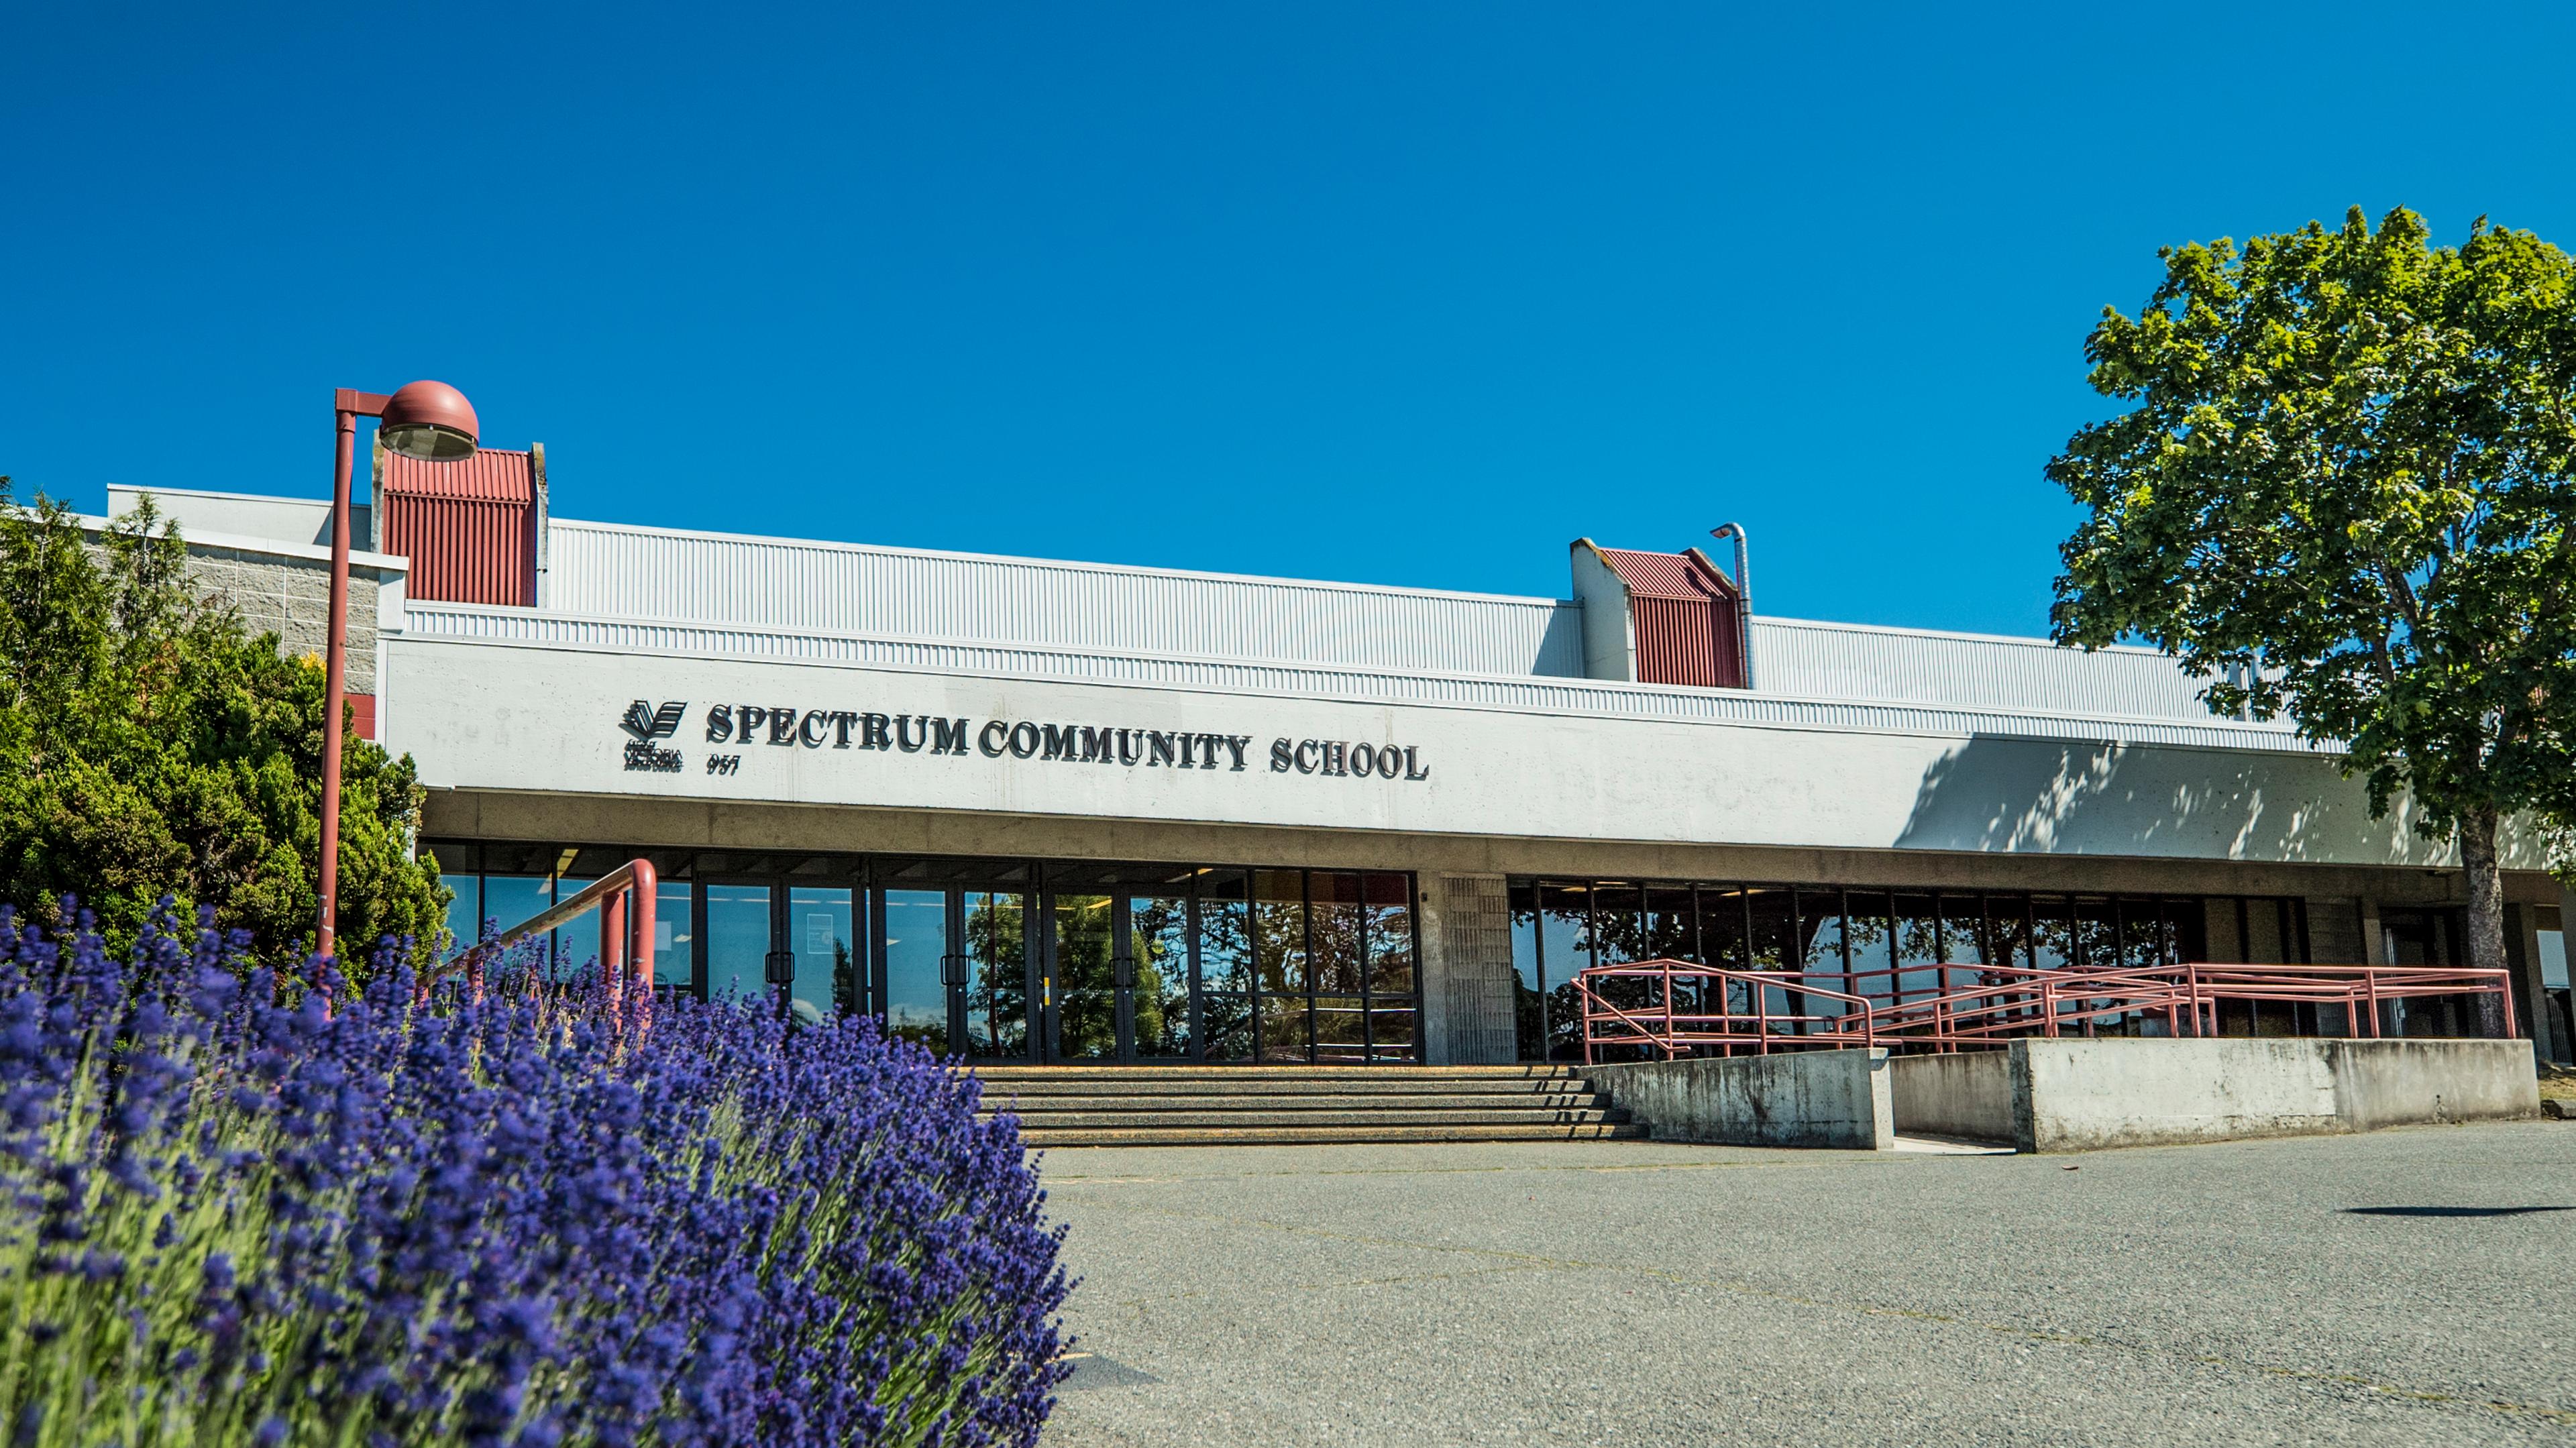 Spectrum Community School.jpg